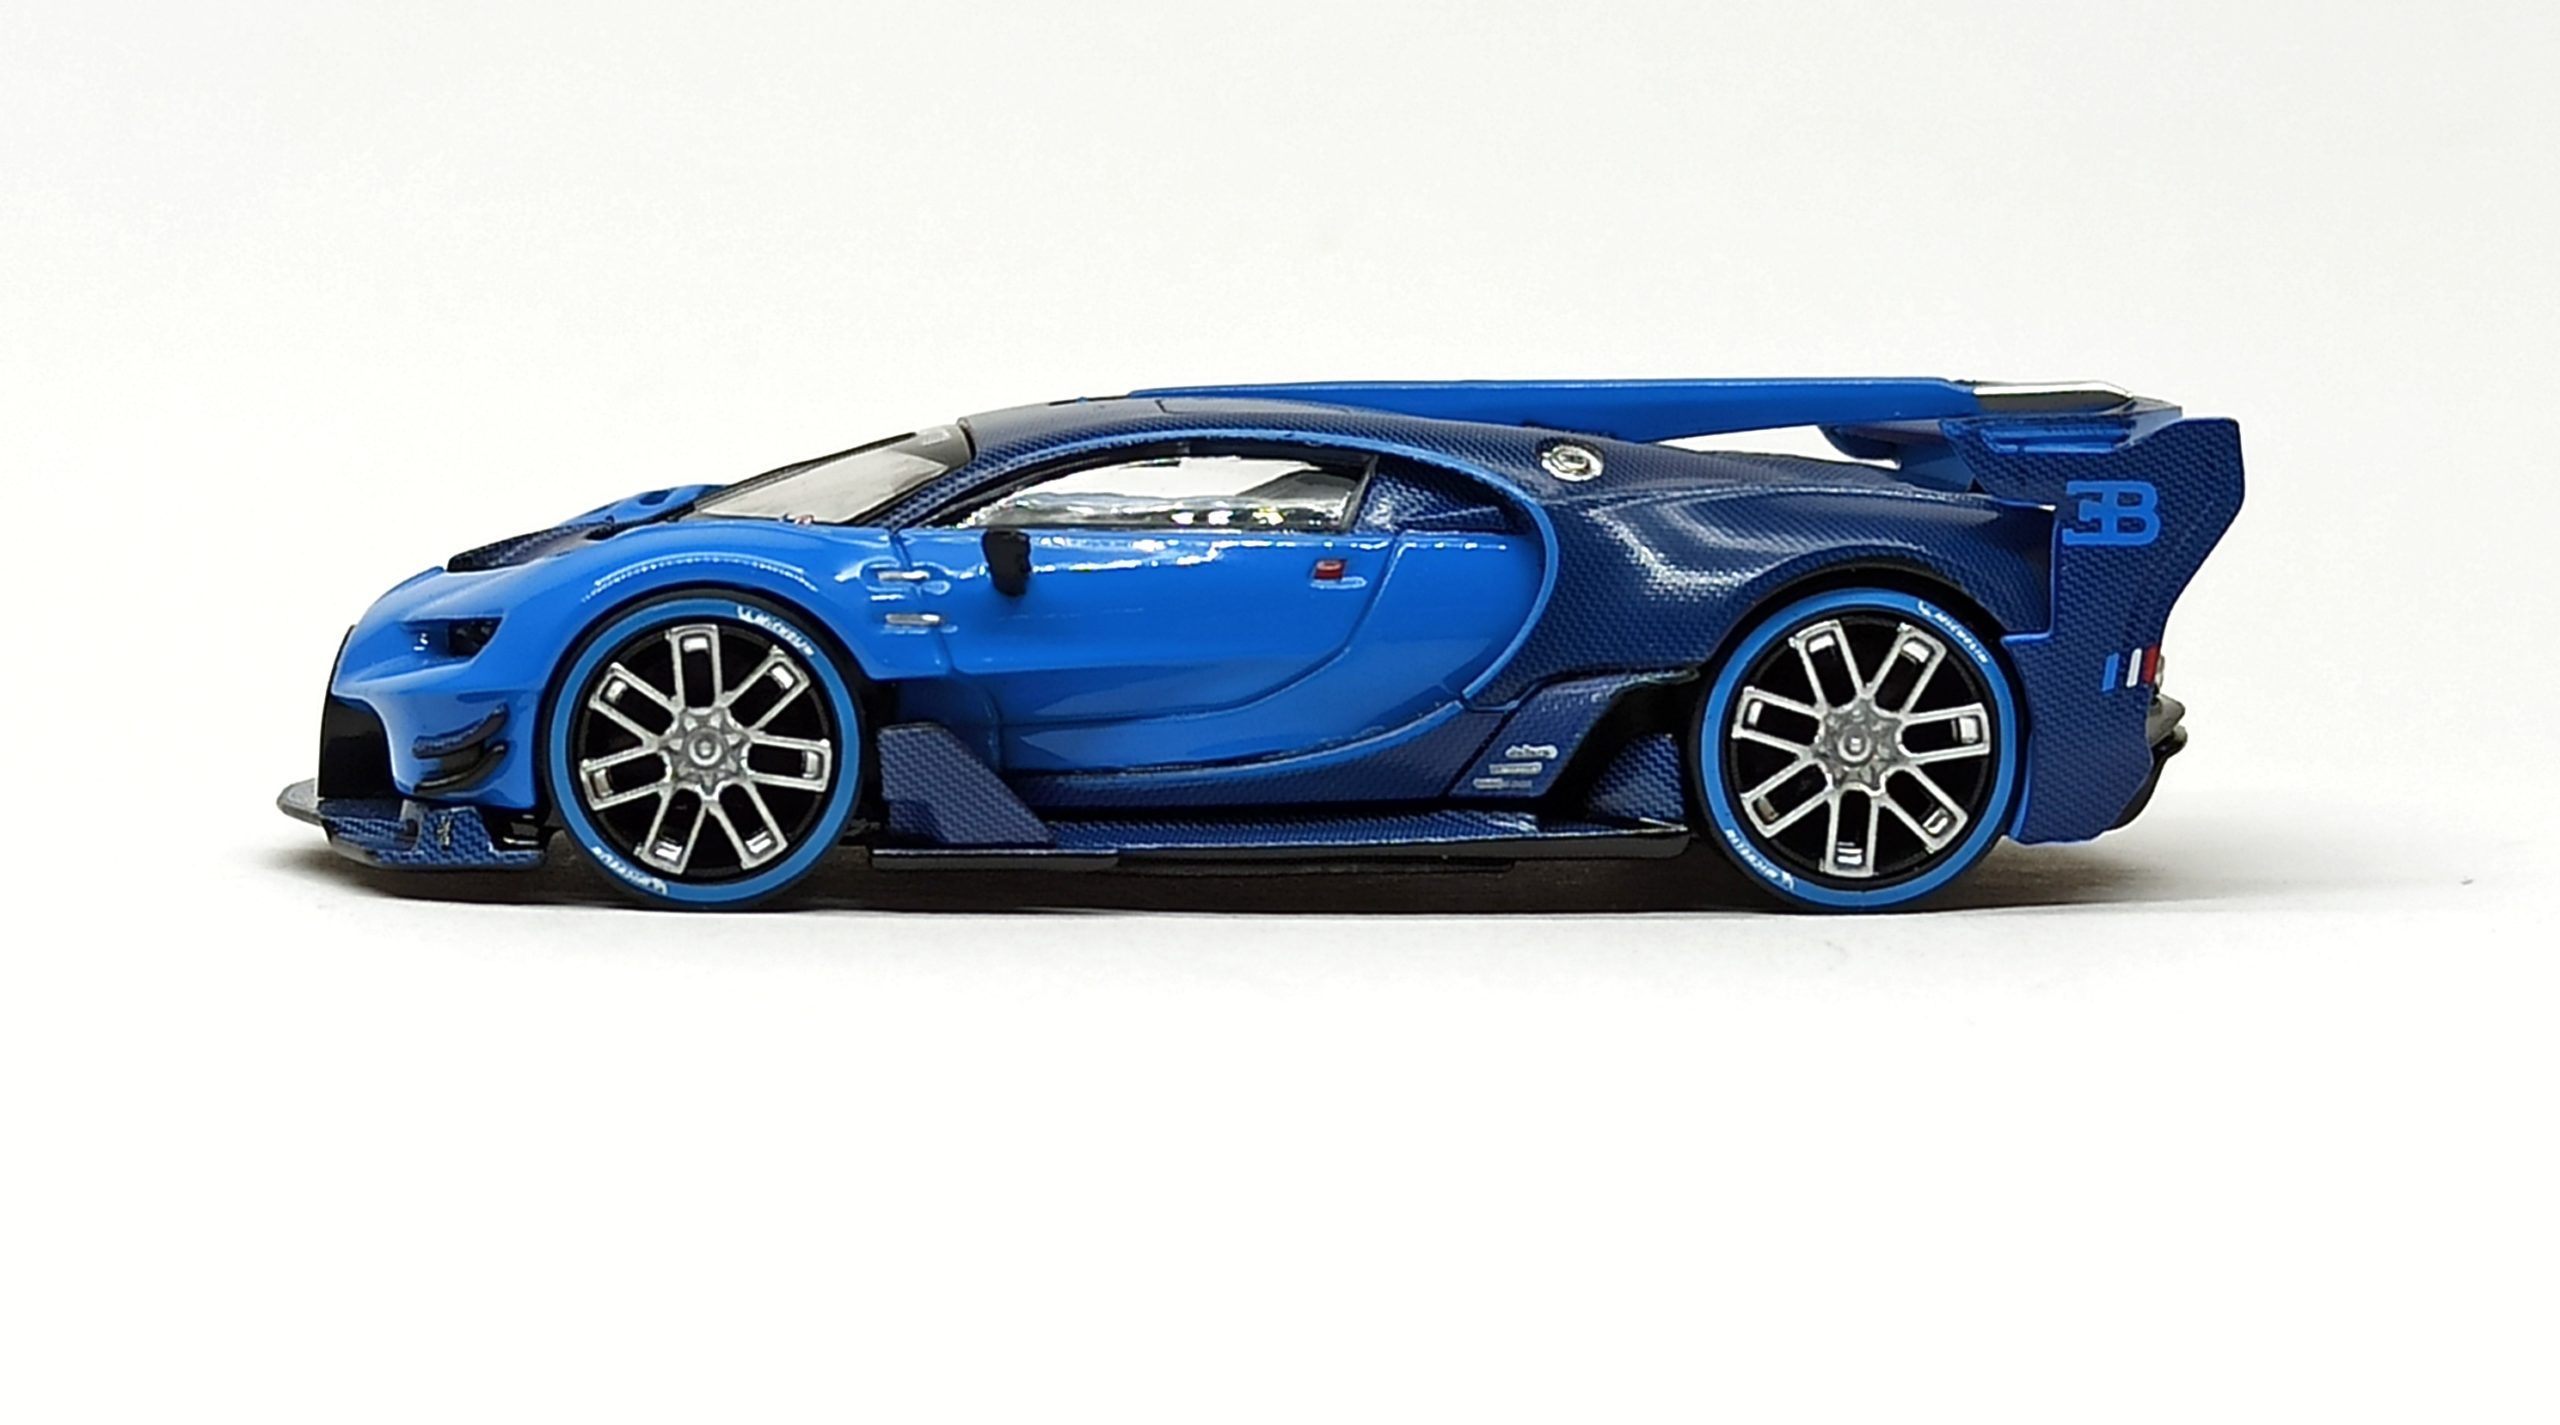 Mini GT Bugatti Vision Gran Turismo (MGT00266-L) 2021 light blue